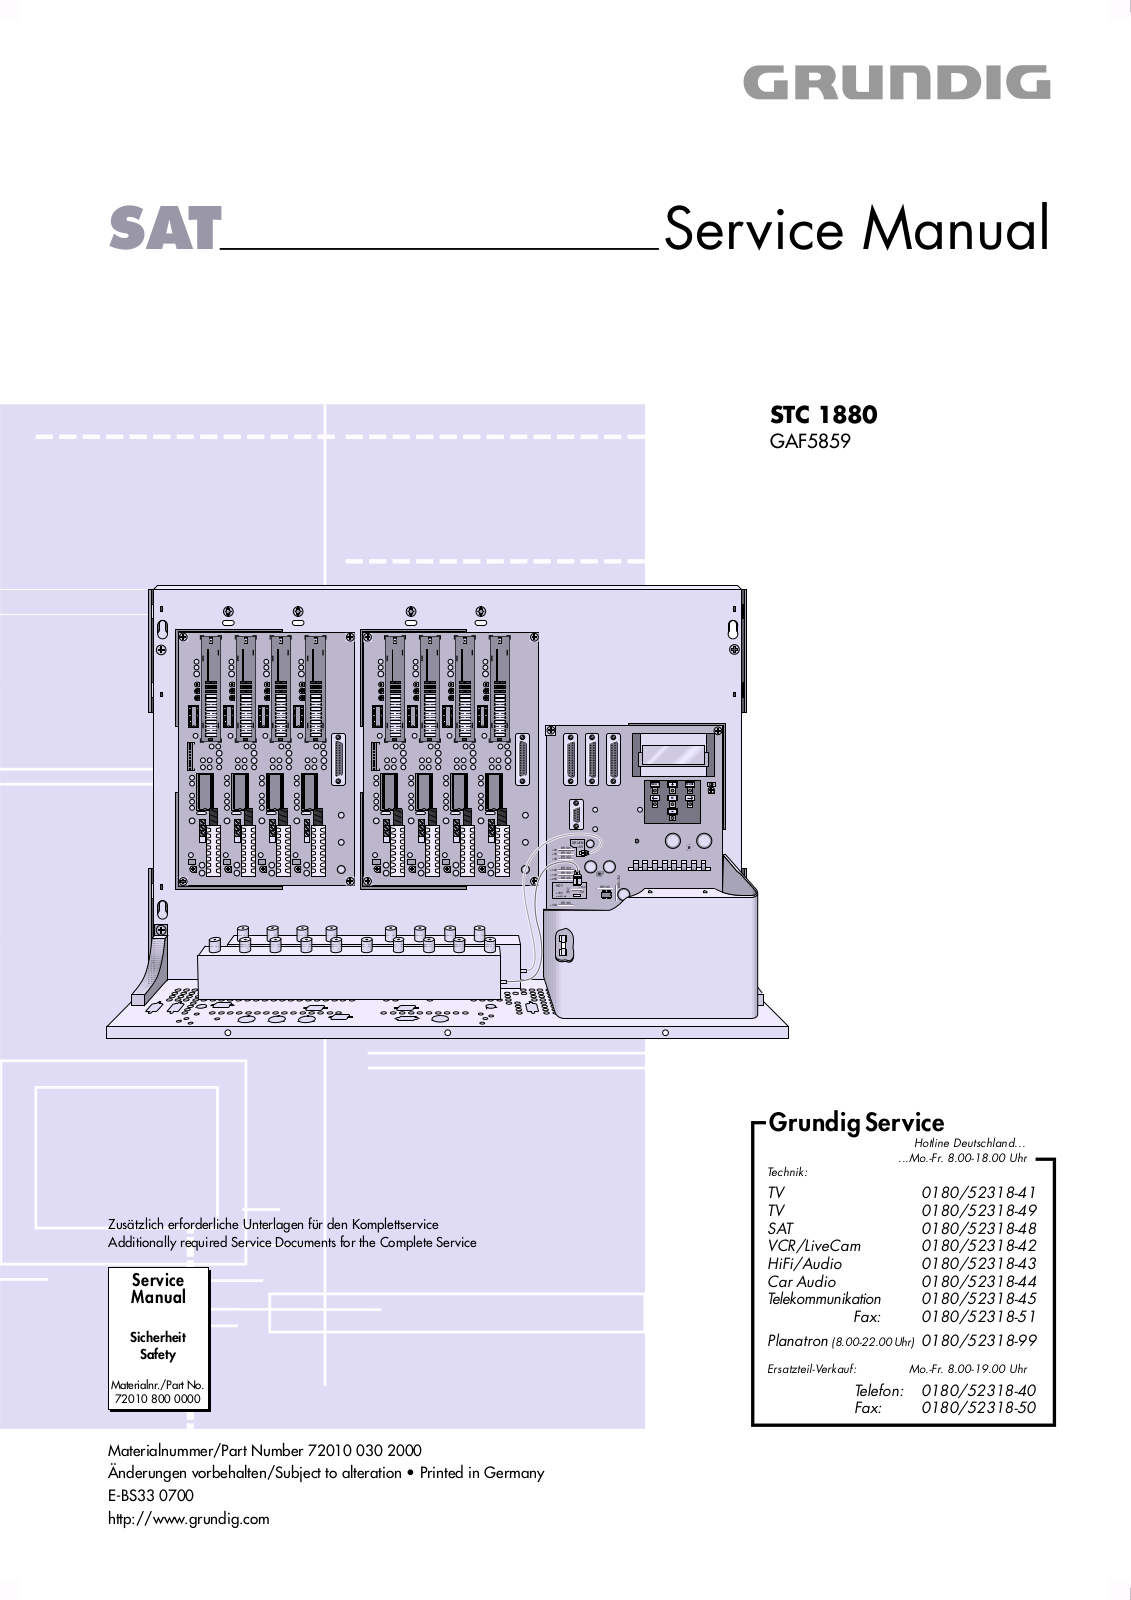 Grundig STC-1880 Service Manual